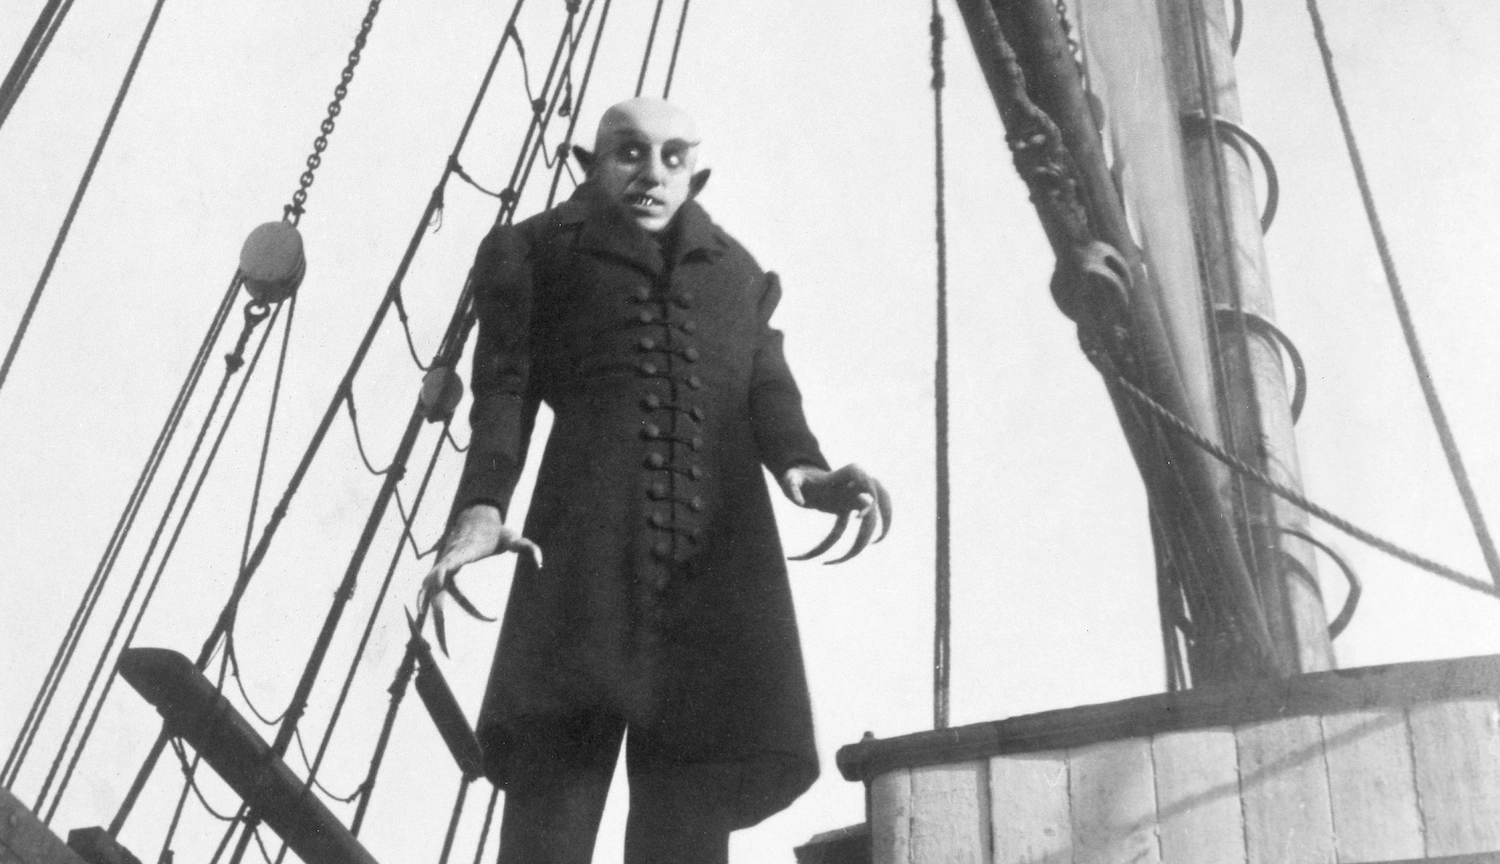 Count Orlok stalks the crew aboard the Demeter in Nosferatu.